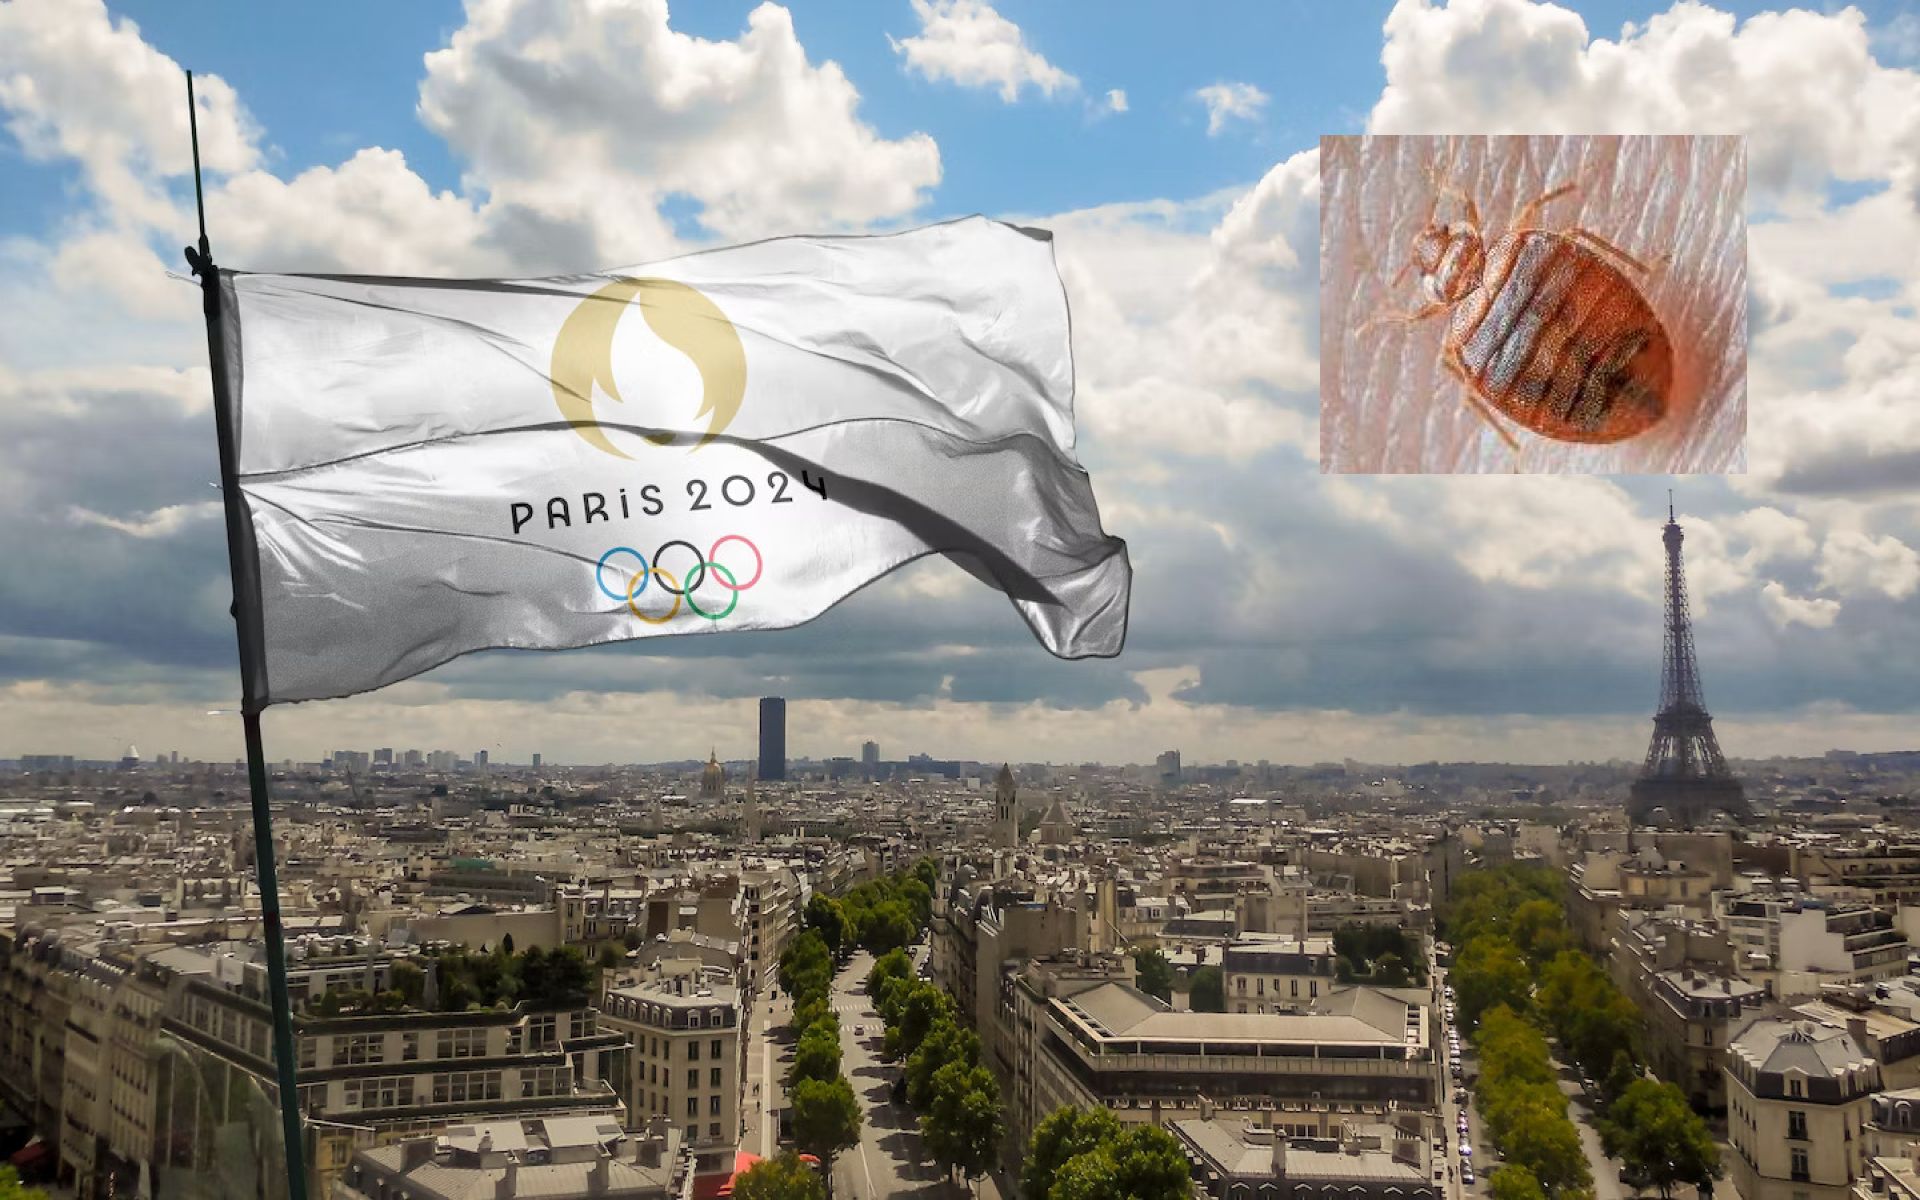 bedbug outbreak in paris before 2024 olympics